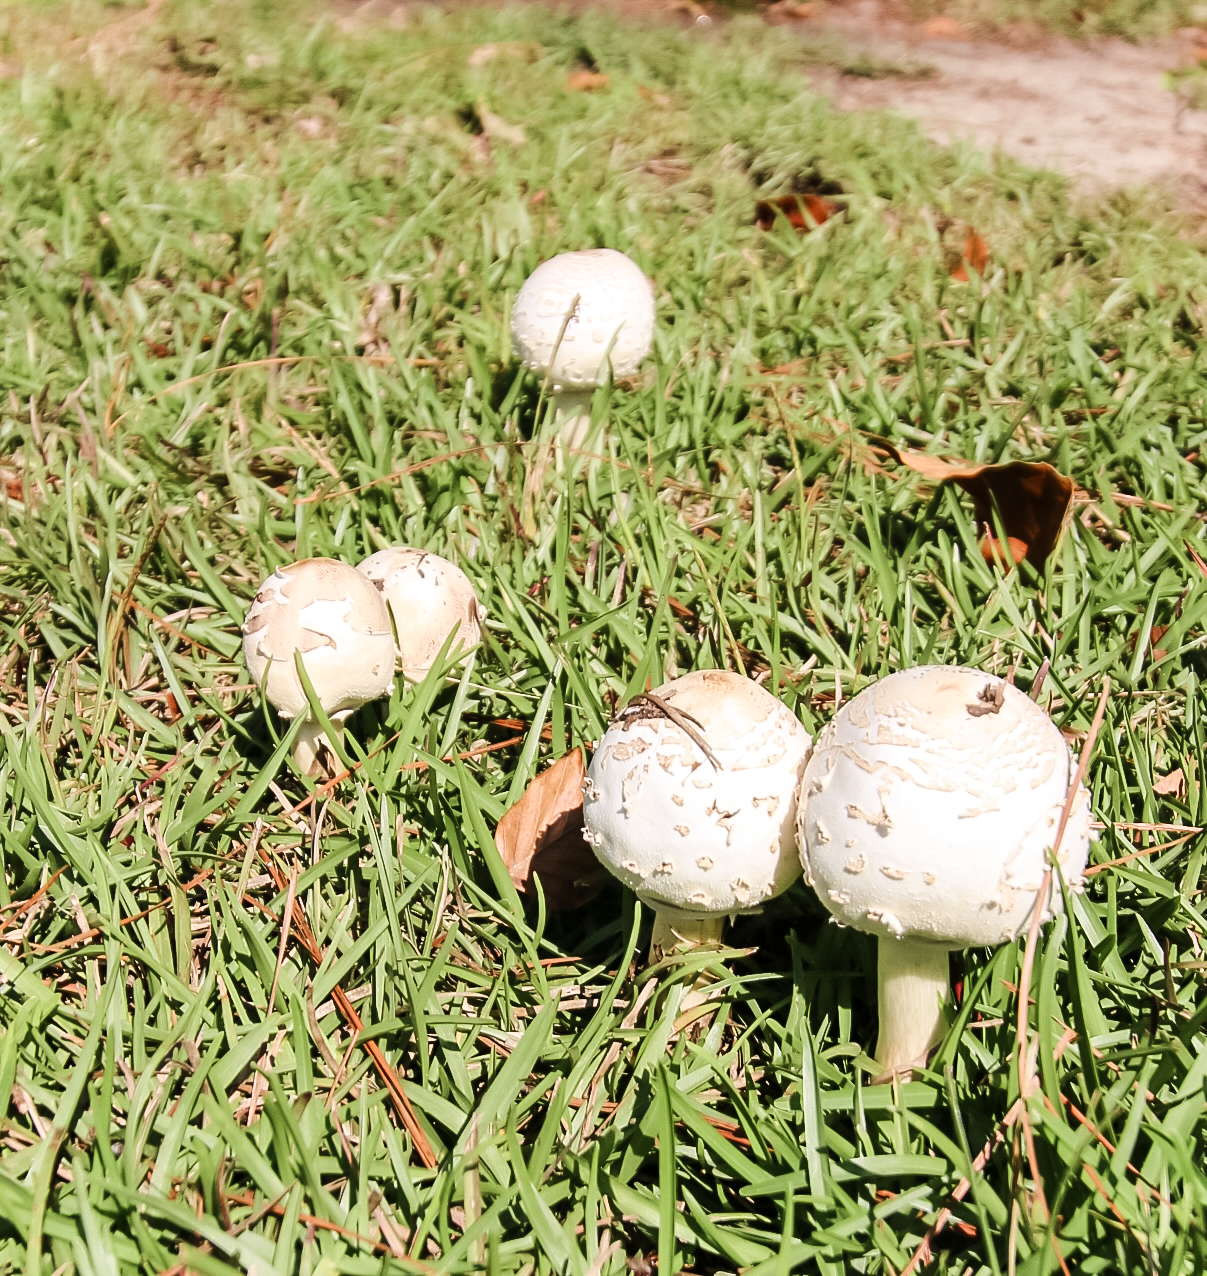 mushroom growing in the grass